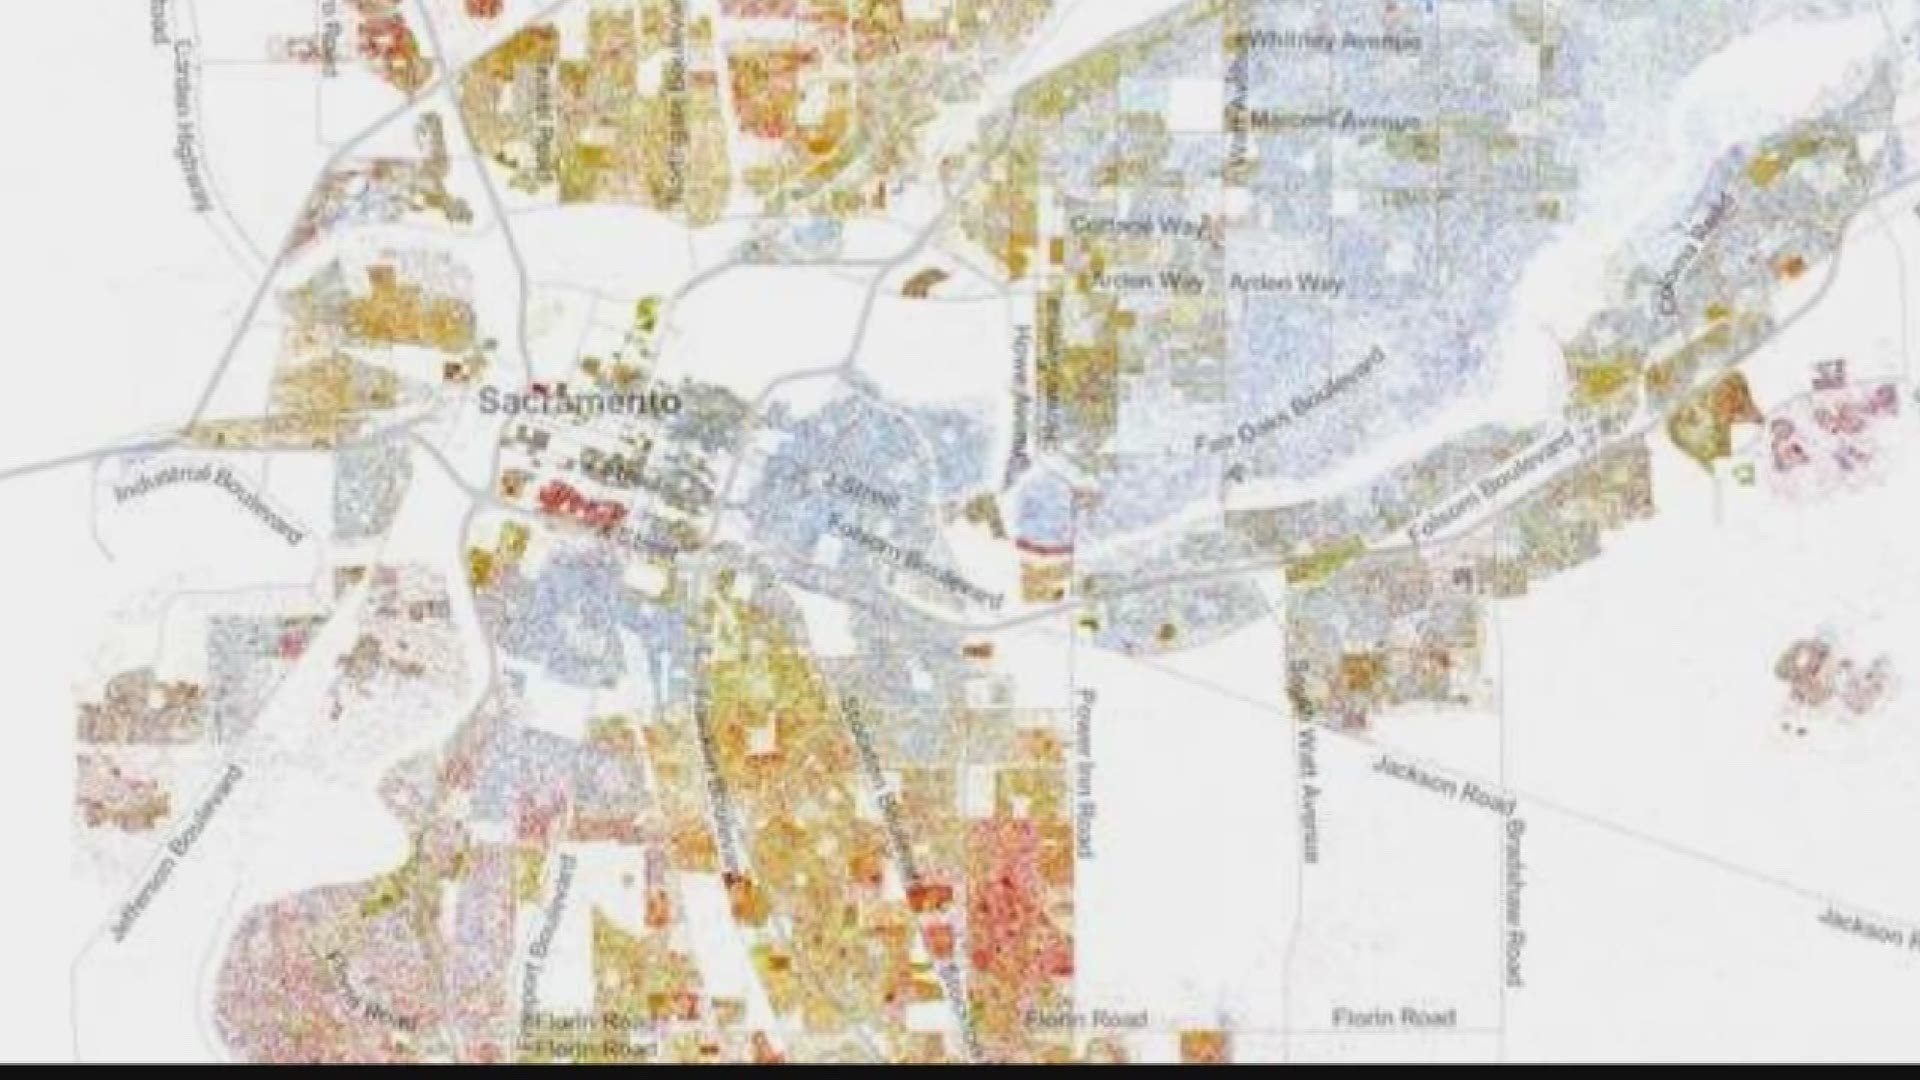 How segregated is Sacramento?